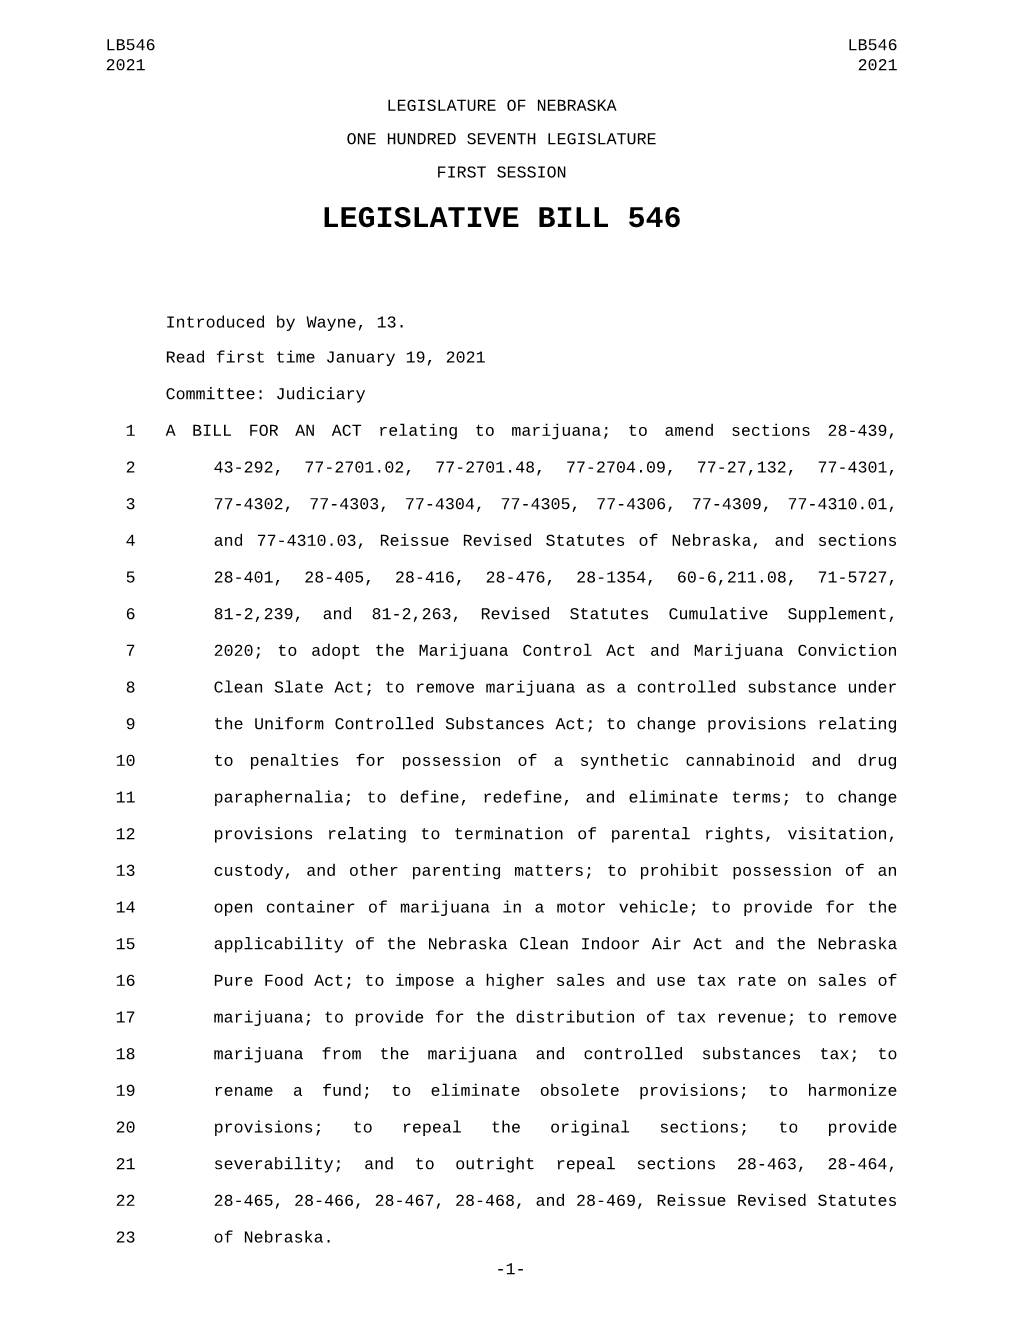 Legislative Bill 546